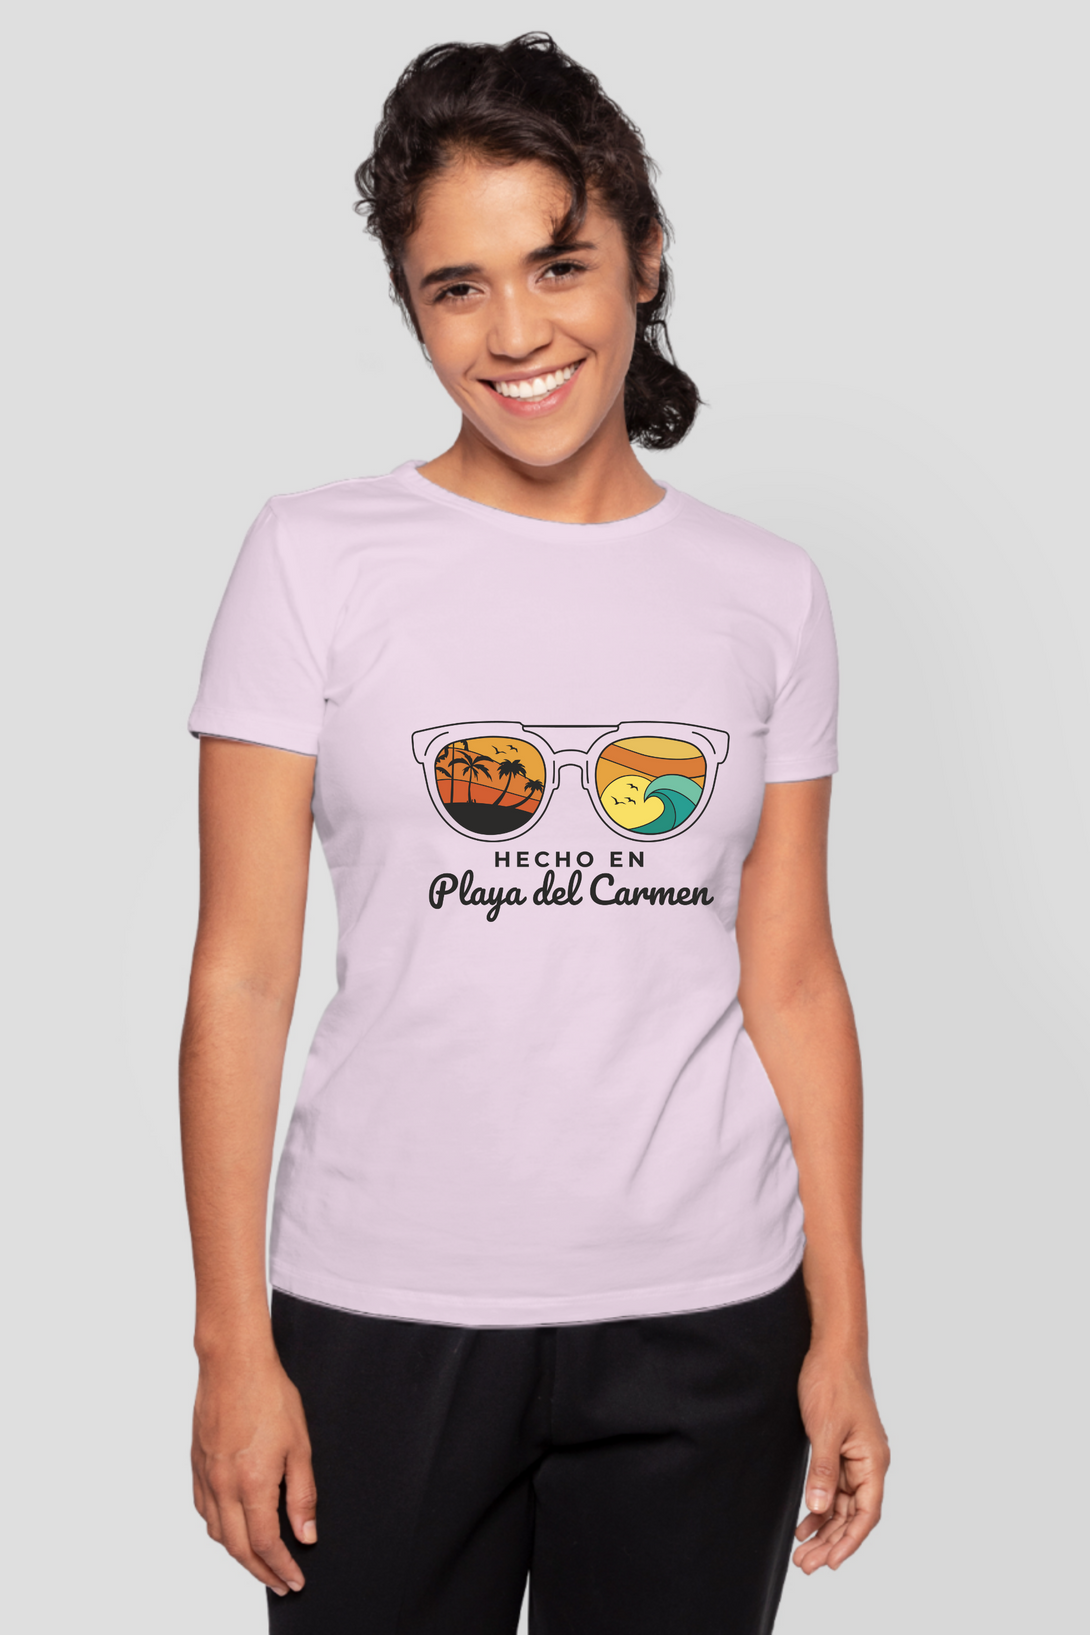 Made In Playa Del Carmen Printed T-Shirt For Women - WowWaves - 9